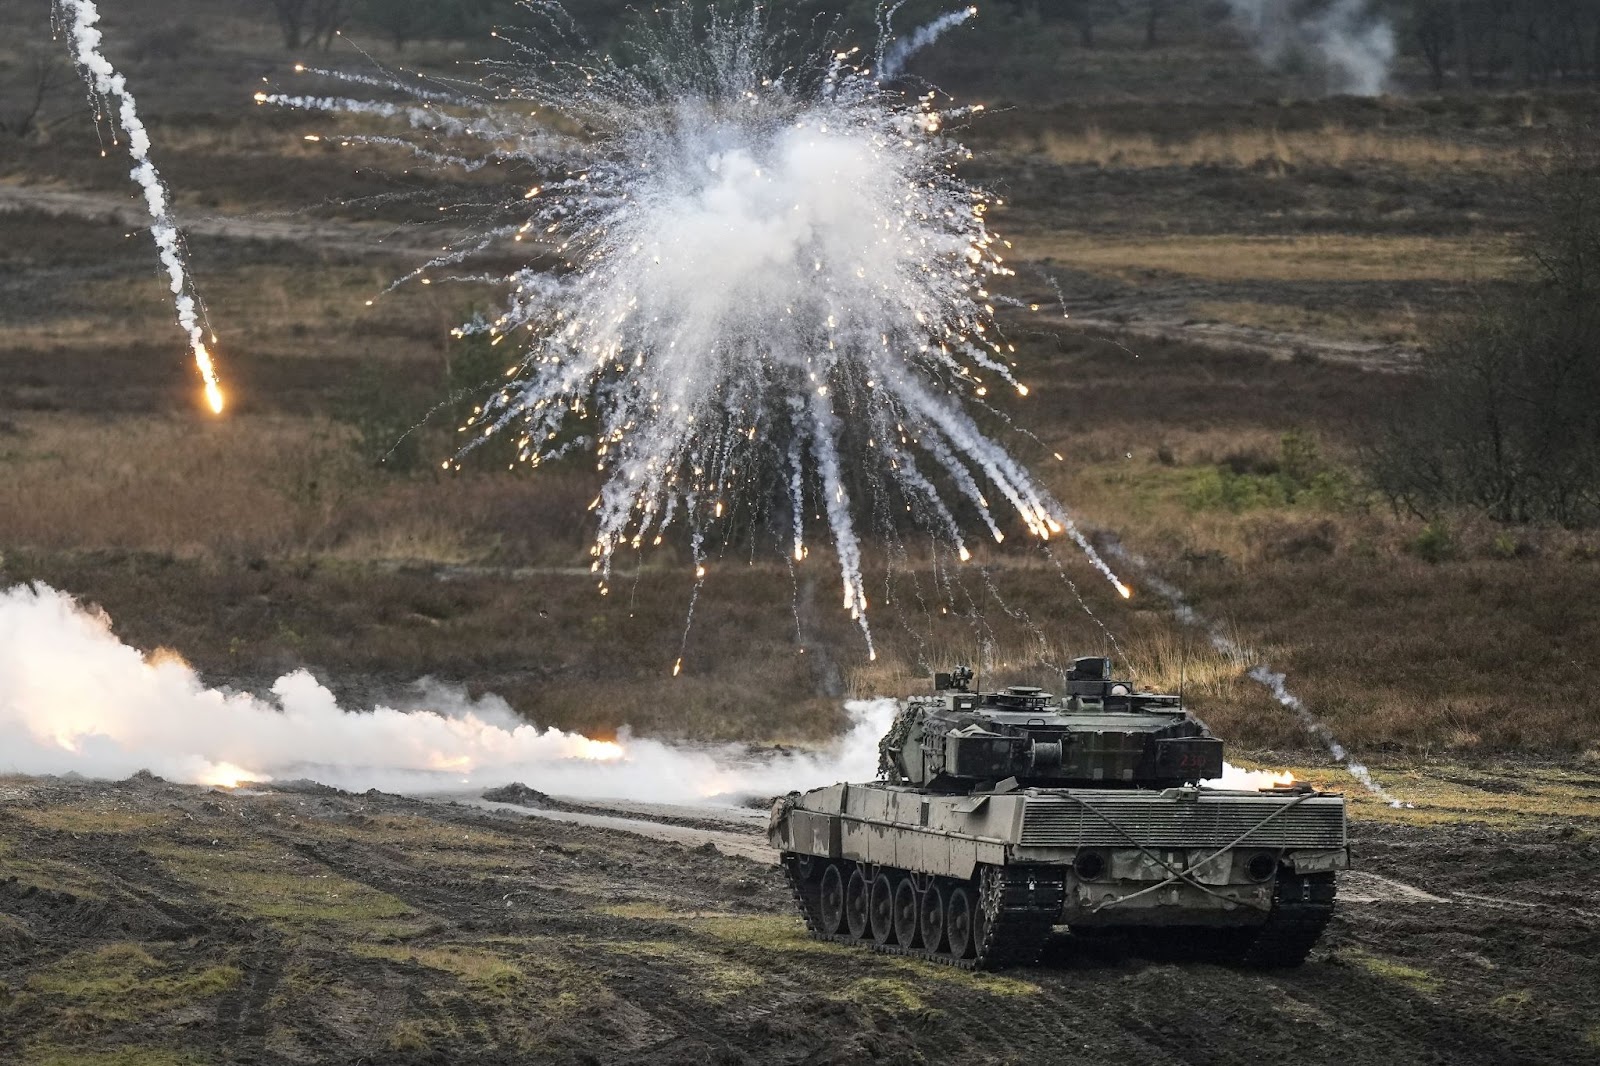 Ukraine receives Leopard-2 tanks from Germany